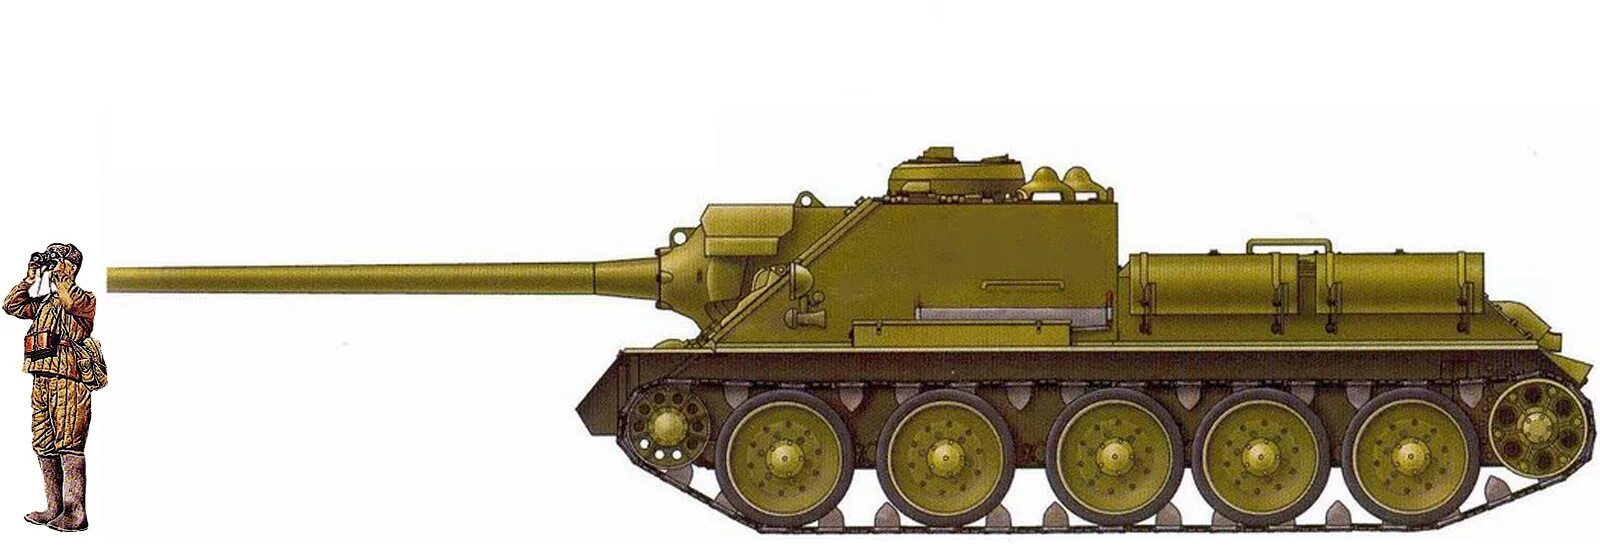 Самоходная артустановка Су- 100.. Су-100y броня. Советский танк Су 100. Су-85 танк СССР.